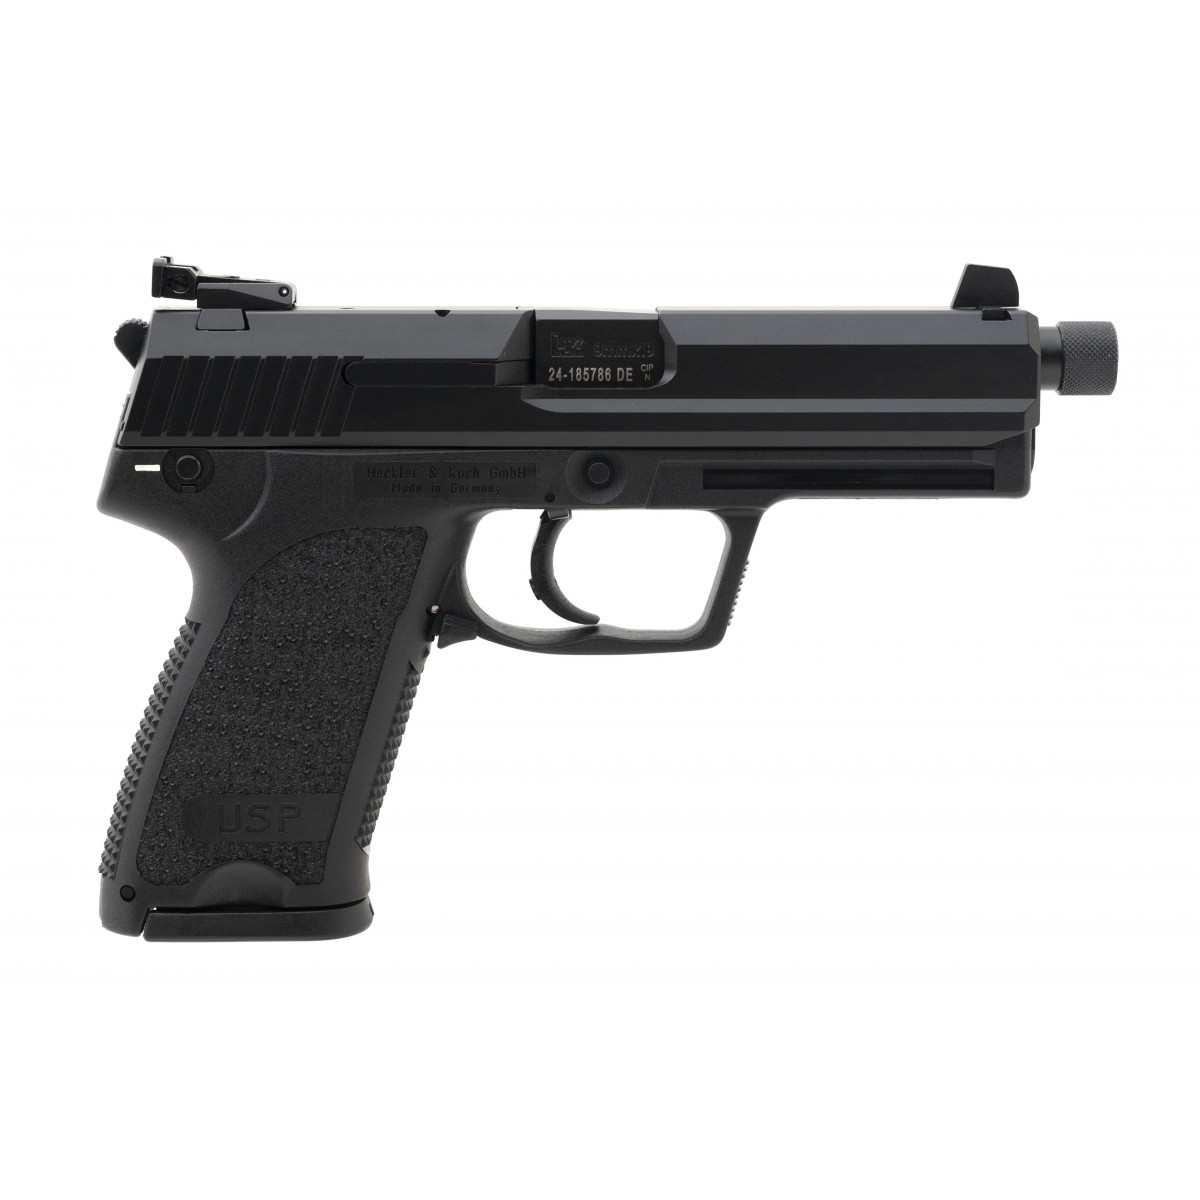 SN: 24-189974) HK USP Tactical V1 Pistol 9mm (NGZ3626) NEW